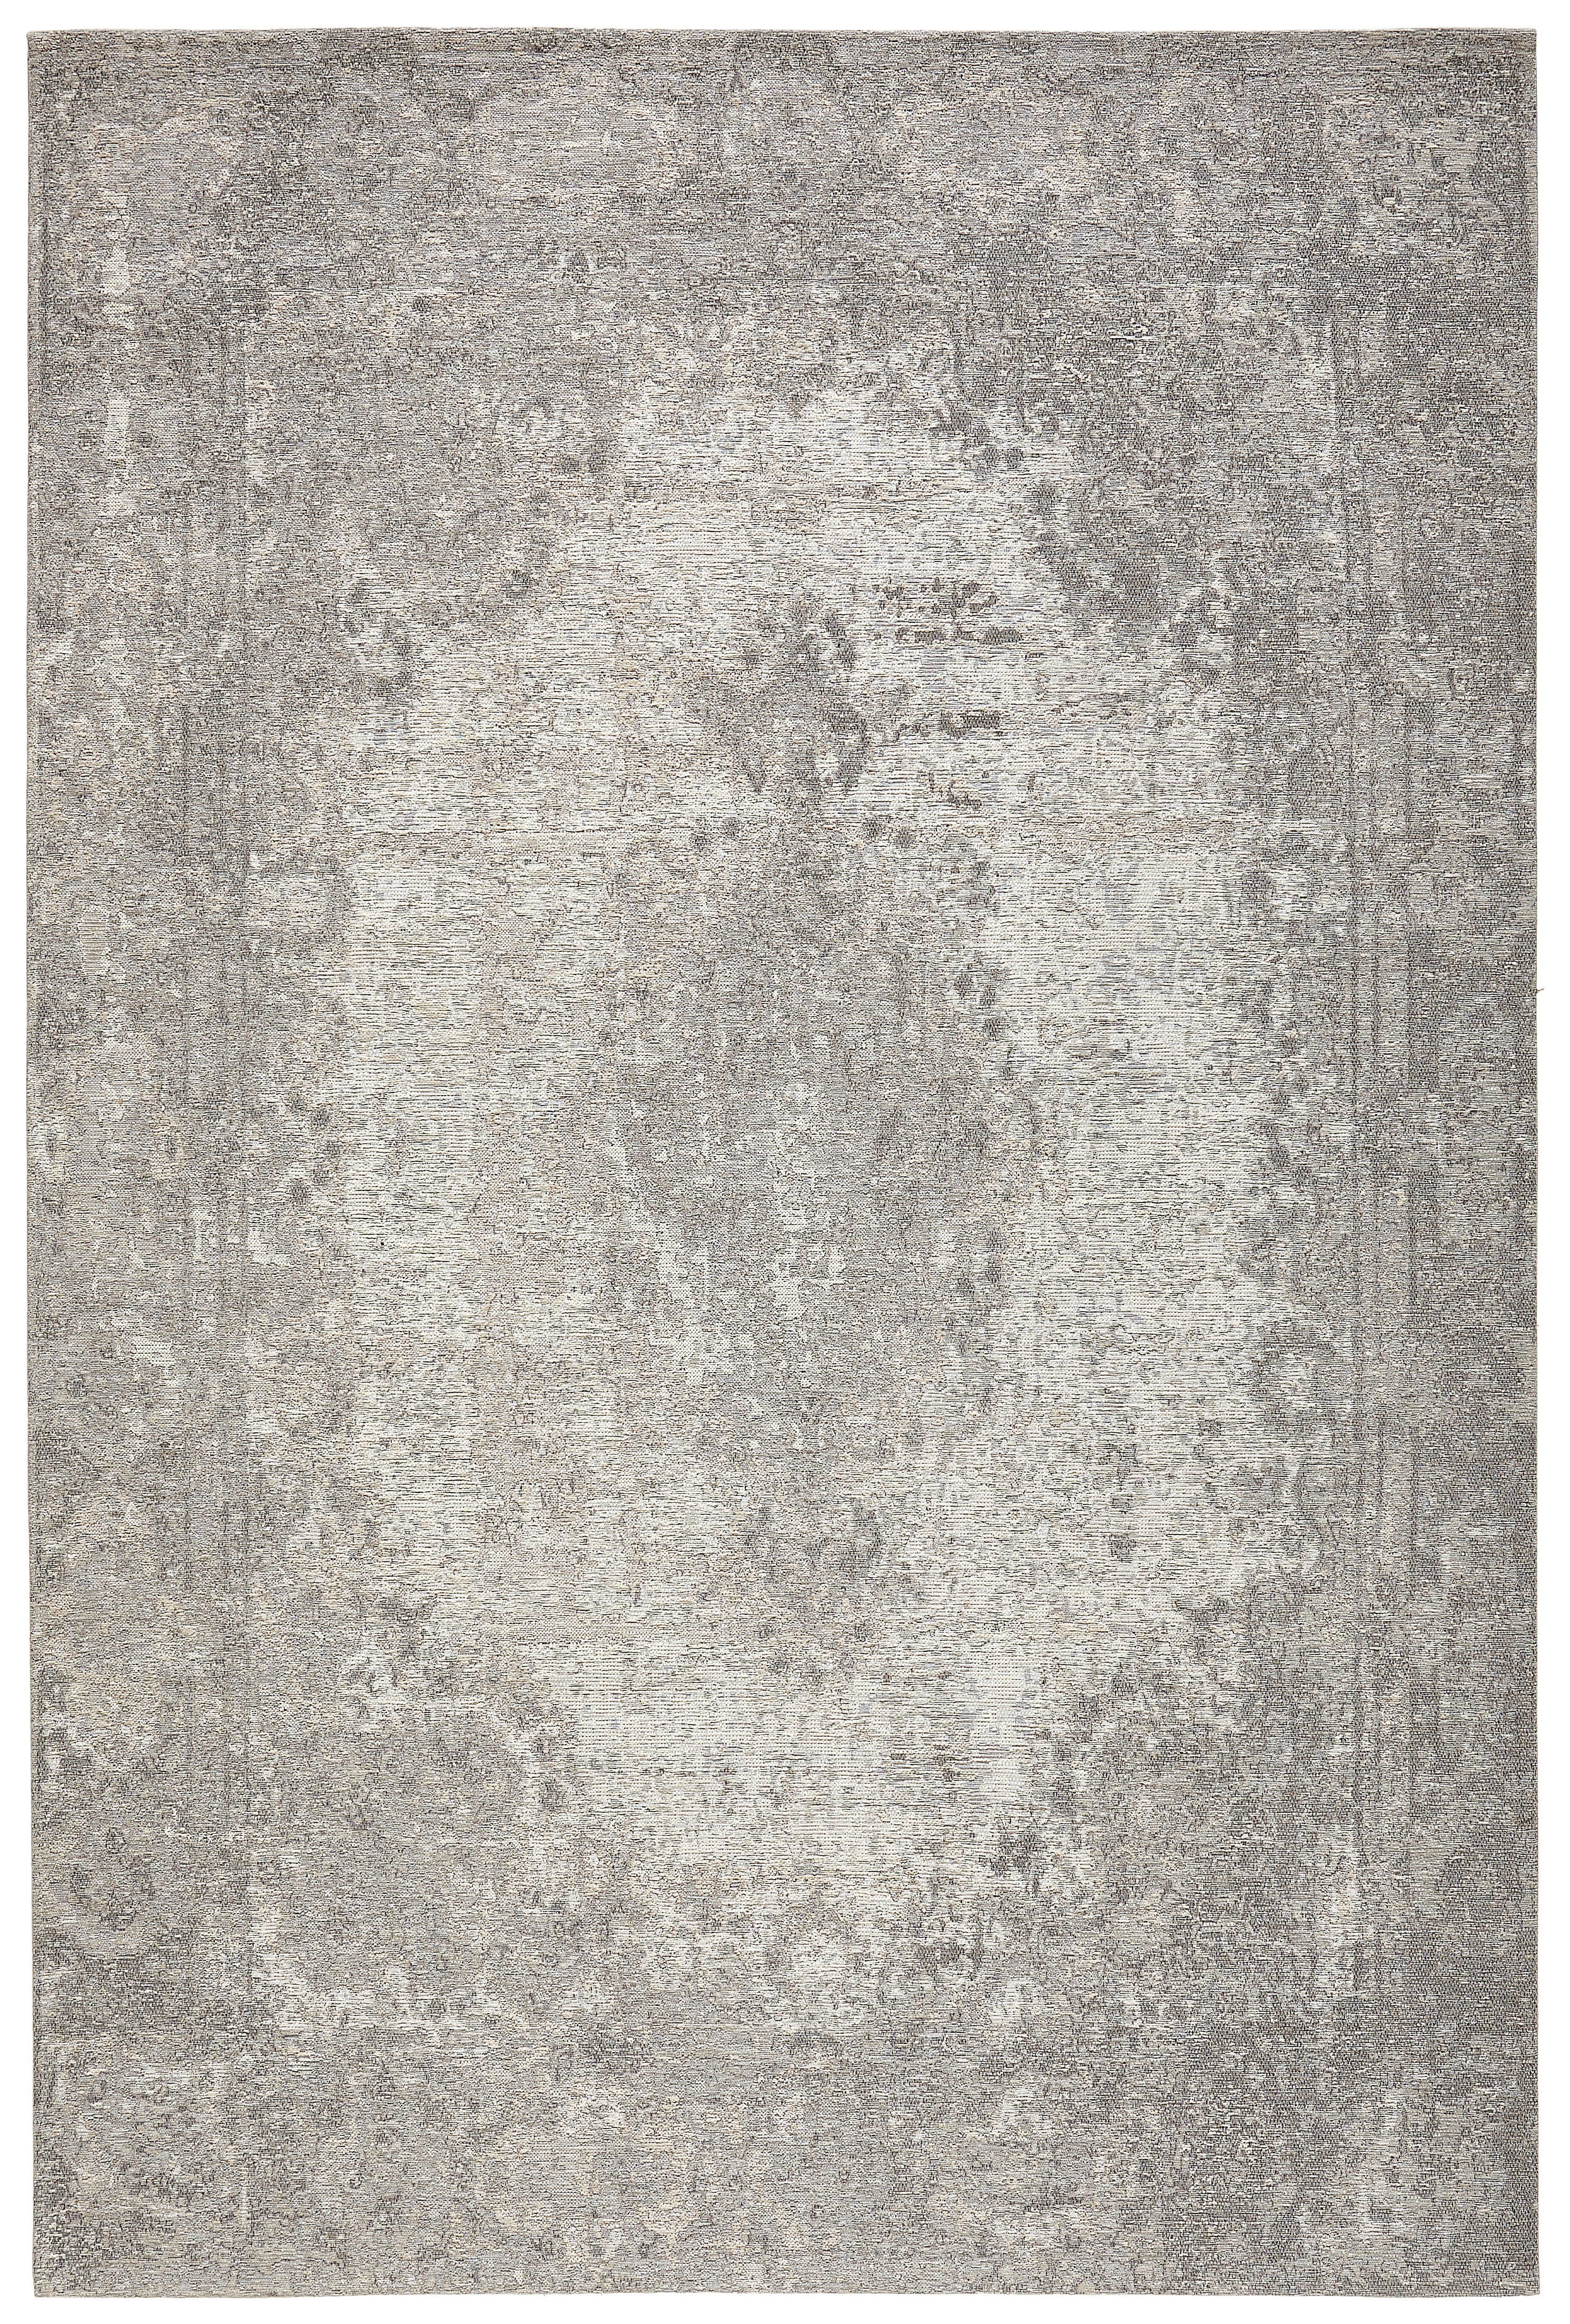 VINTAGE-TEPPICH  68/135 cm  Silberfarben   - Silberfarben, Design, Textil (68/135cm) - Novel